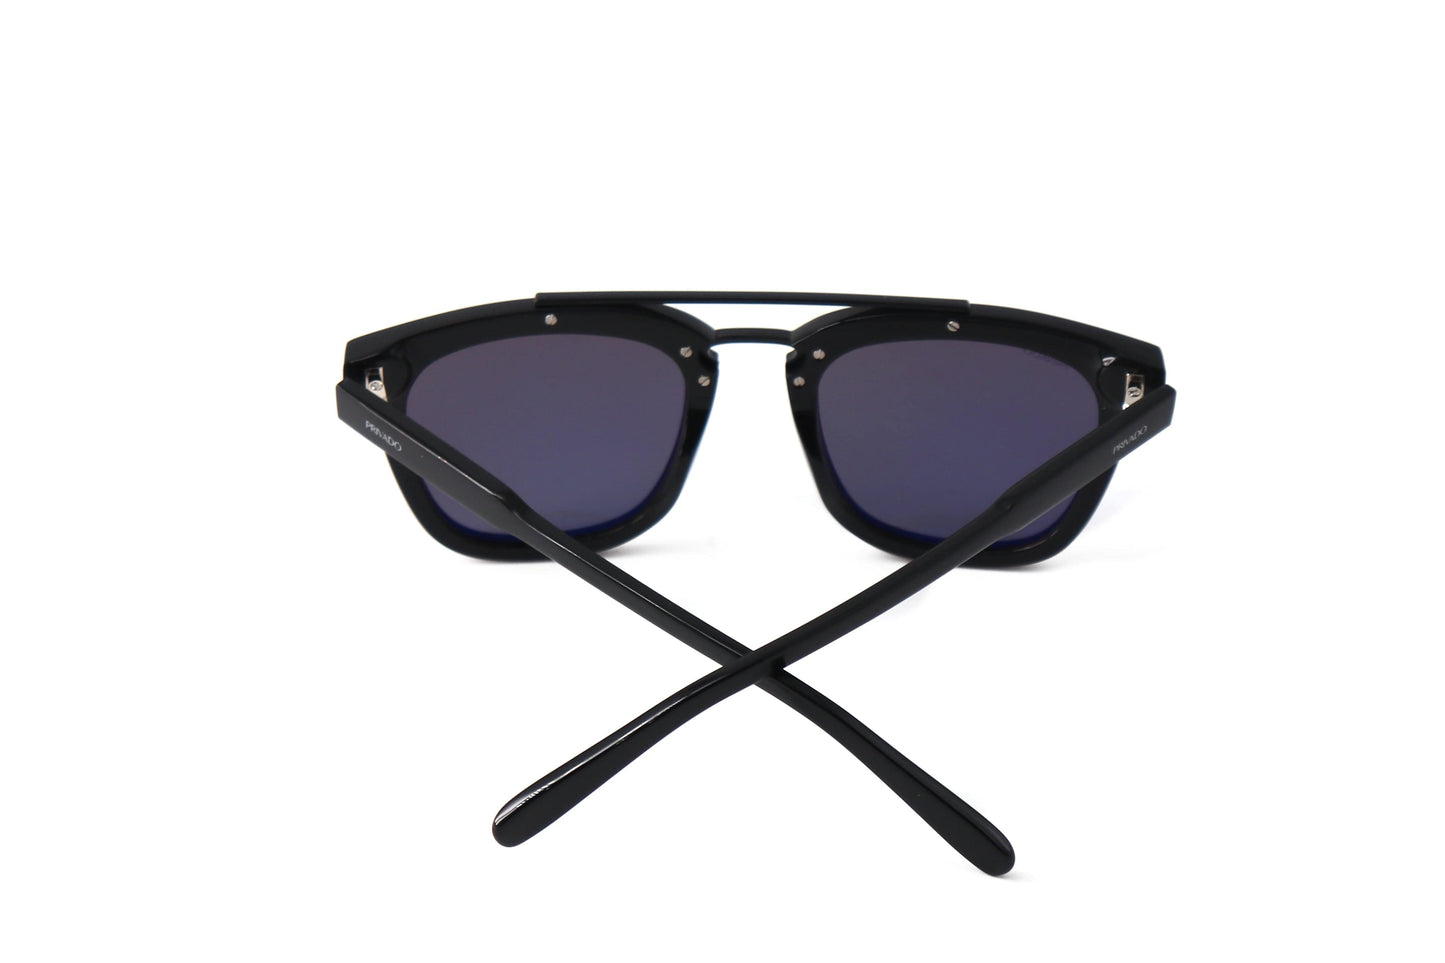 Privado Tyto black sunglasses alternate view